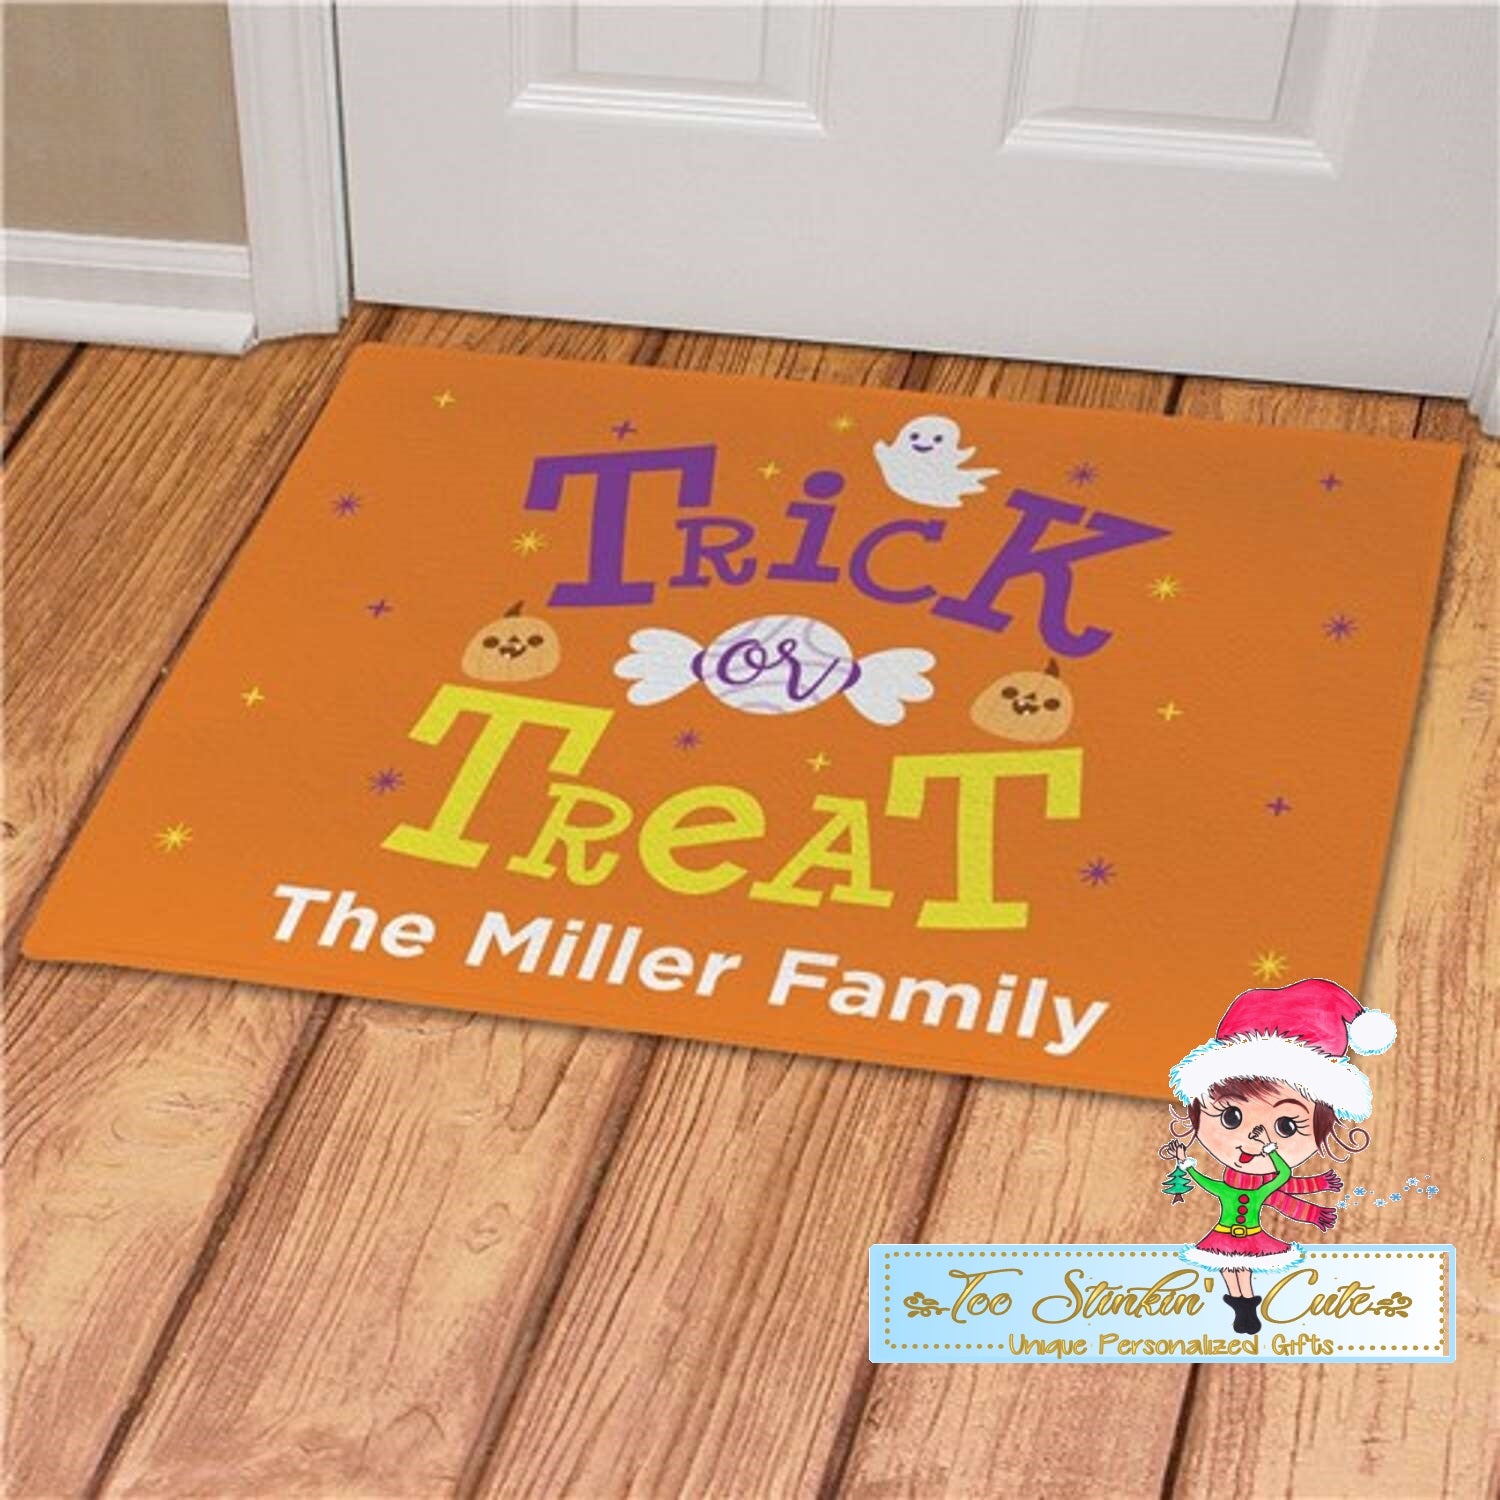 Personalized Orange Trick or Treat Doormat